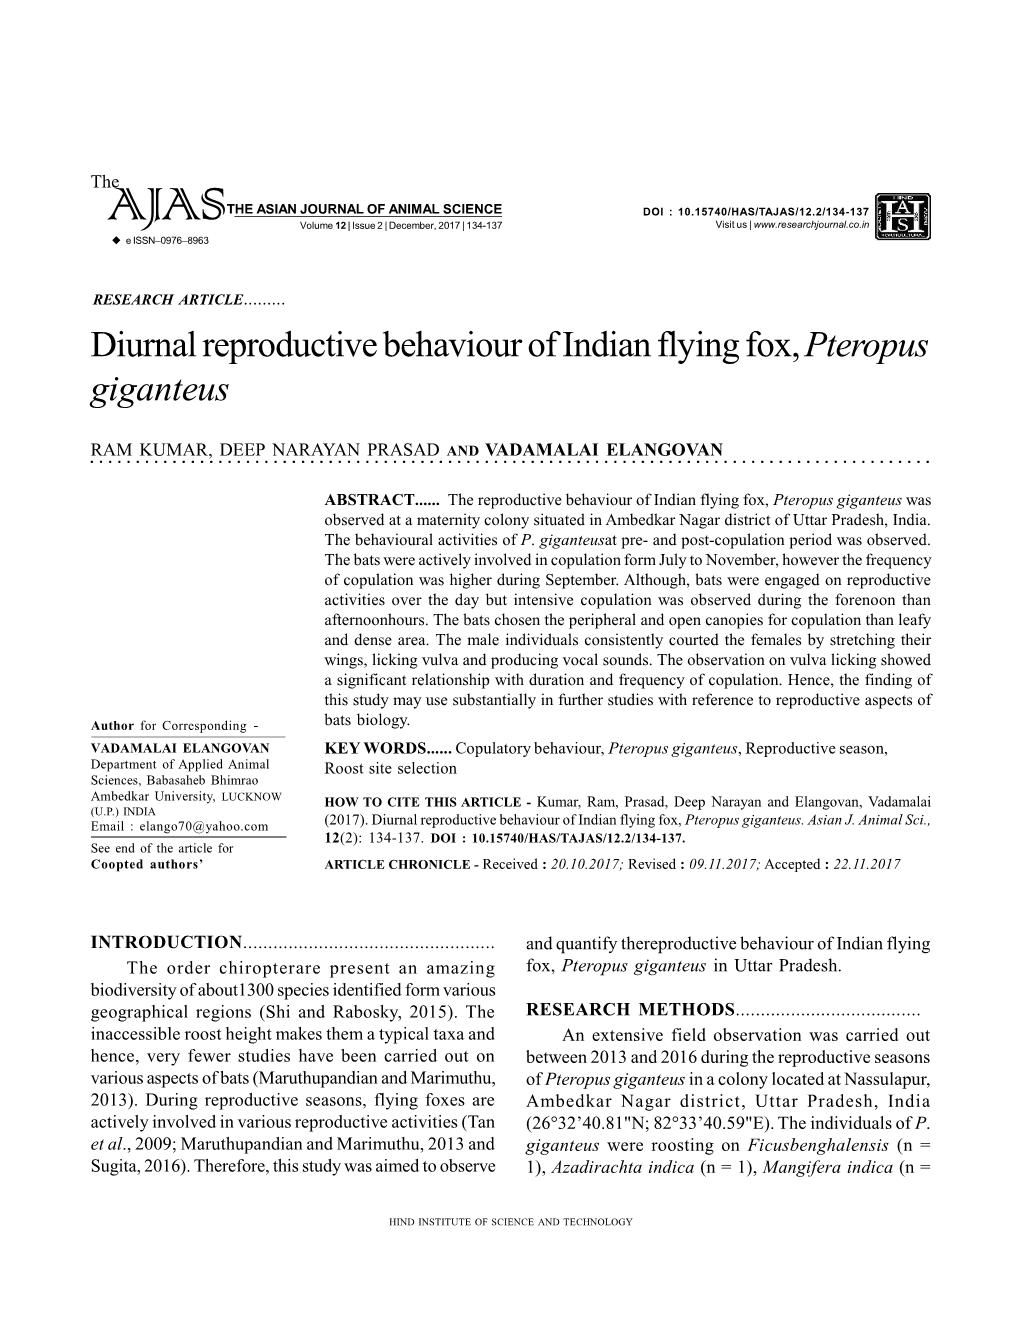 Diurnal Reproductive Behaviour of Indian Flying Fox,Pteropus Giganteus